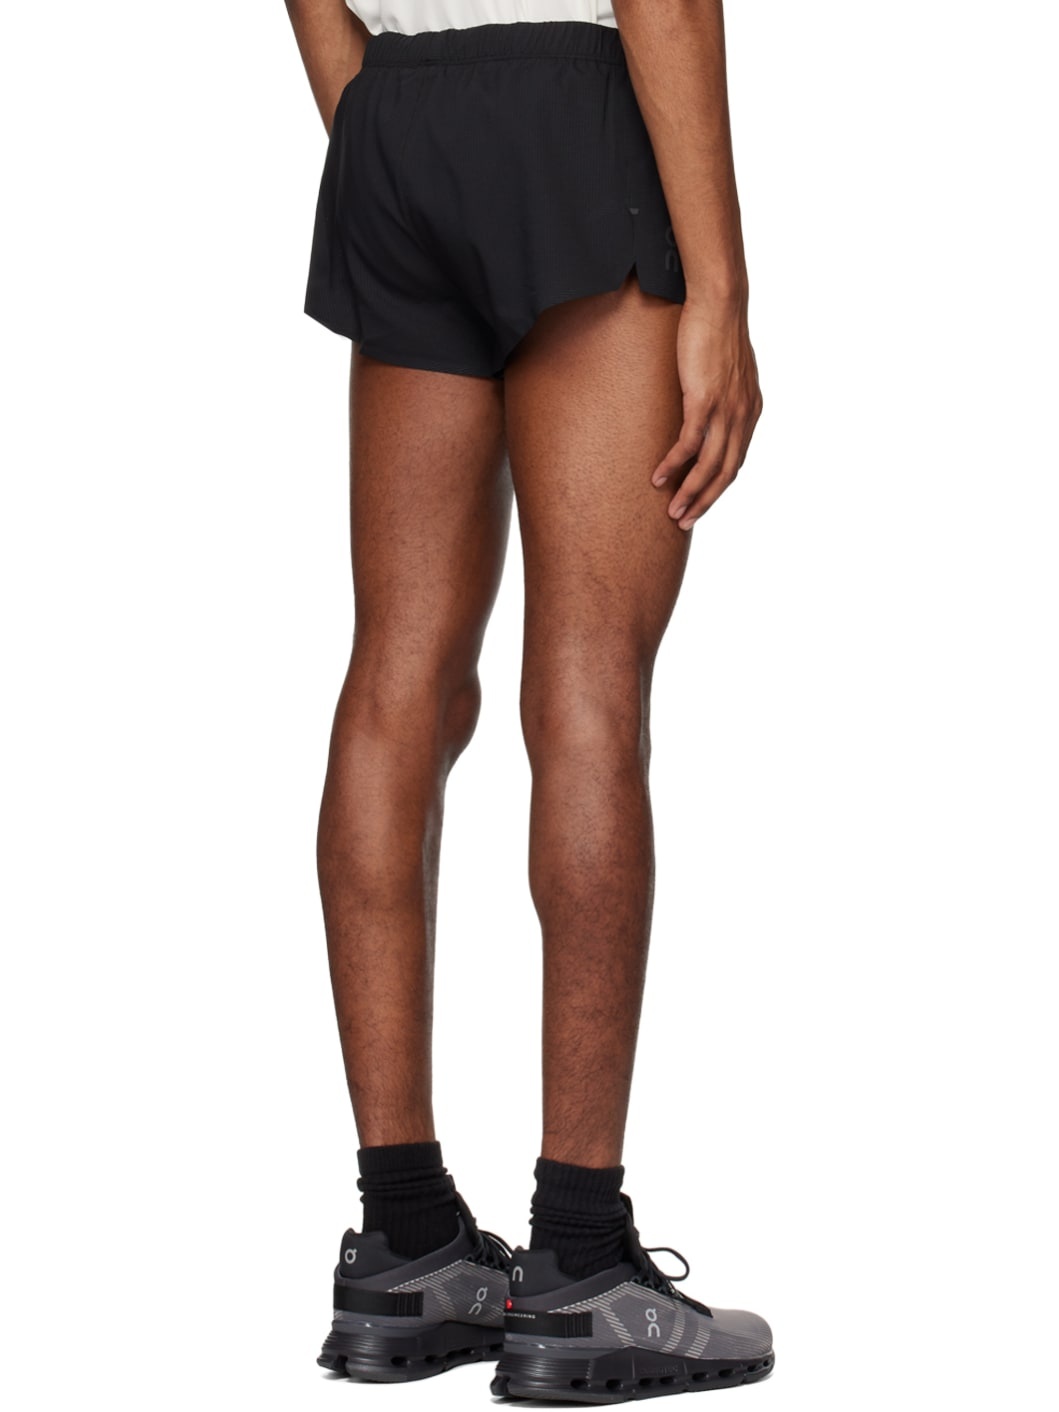 Black Race Shorts - 3